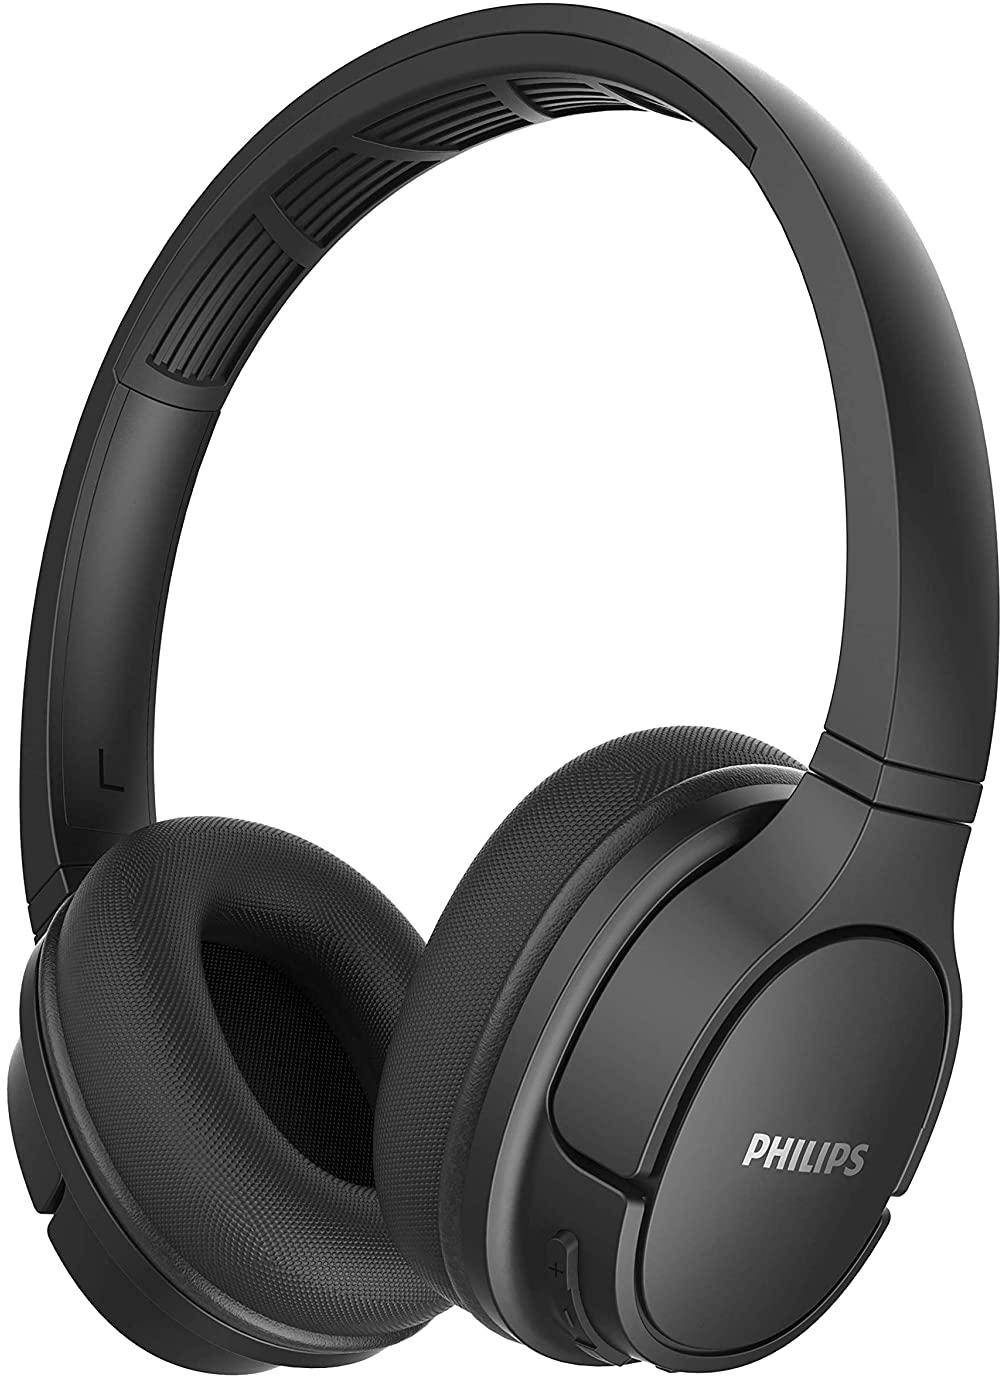 Buy Philips Tash402bk Wireless Headphones Online In India At